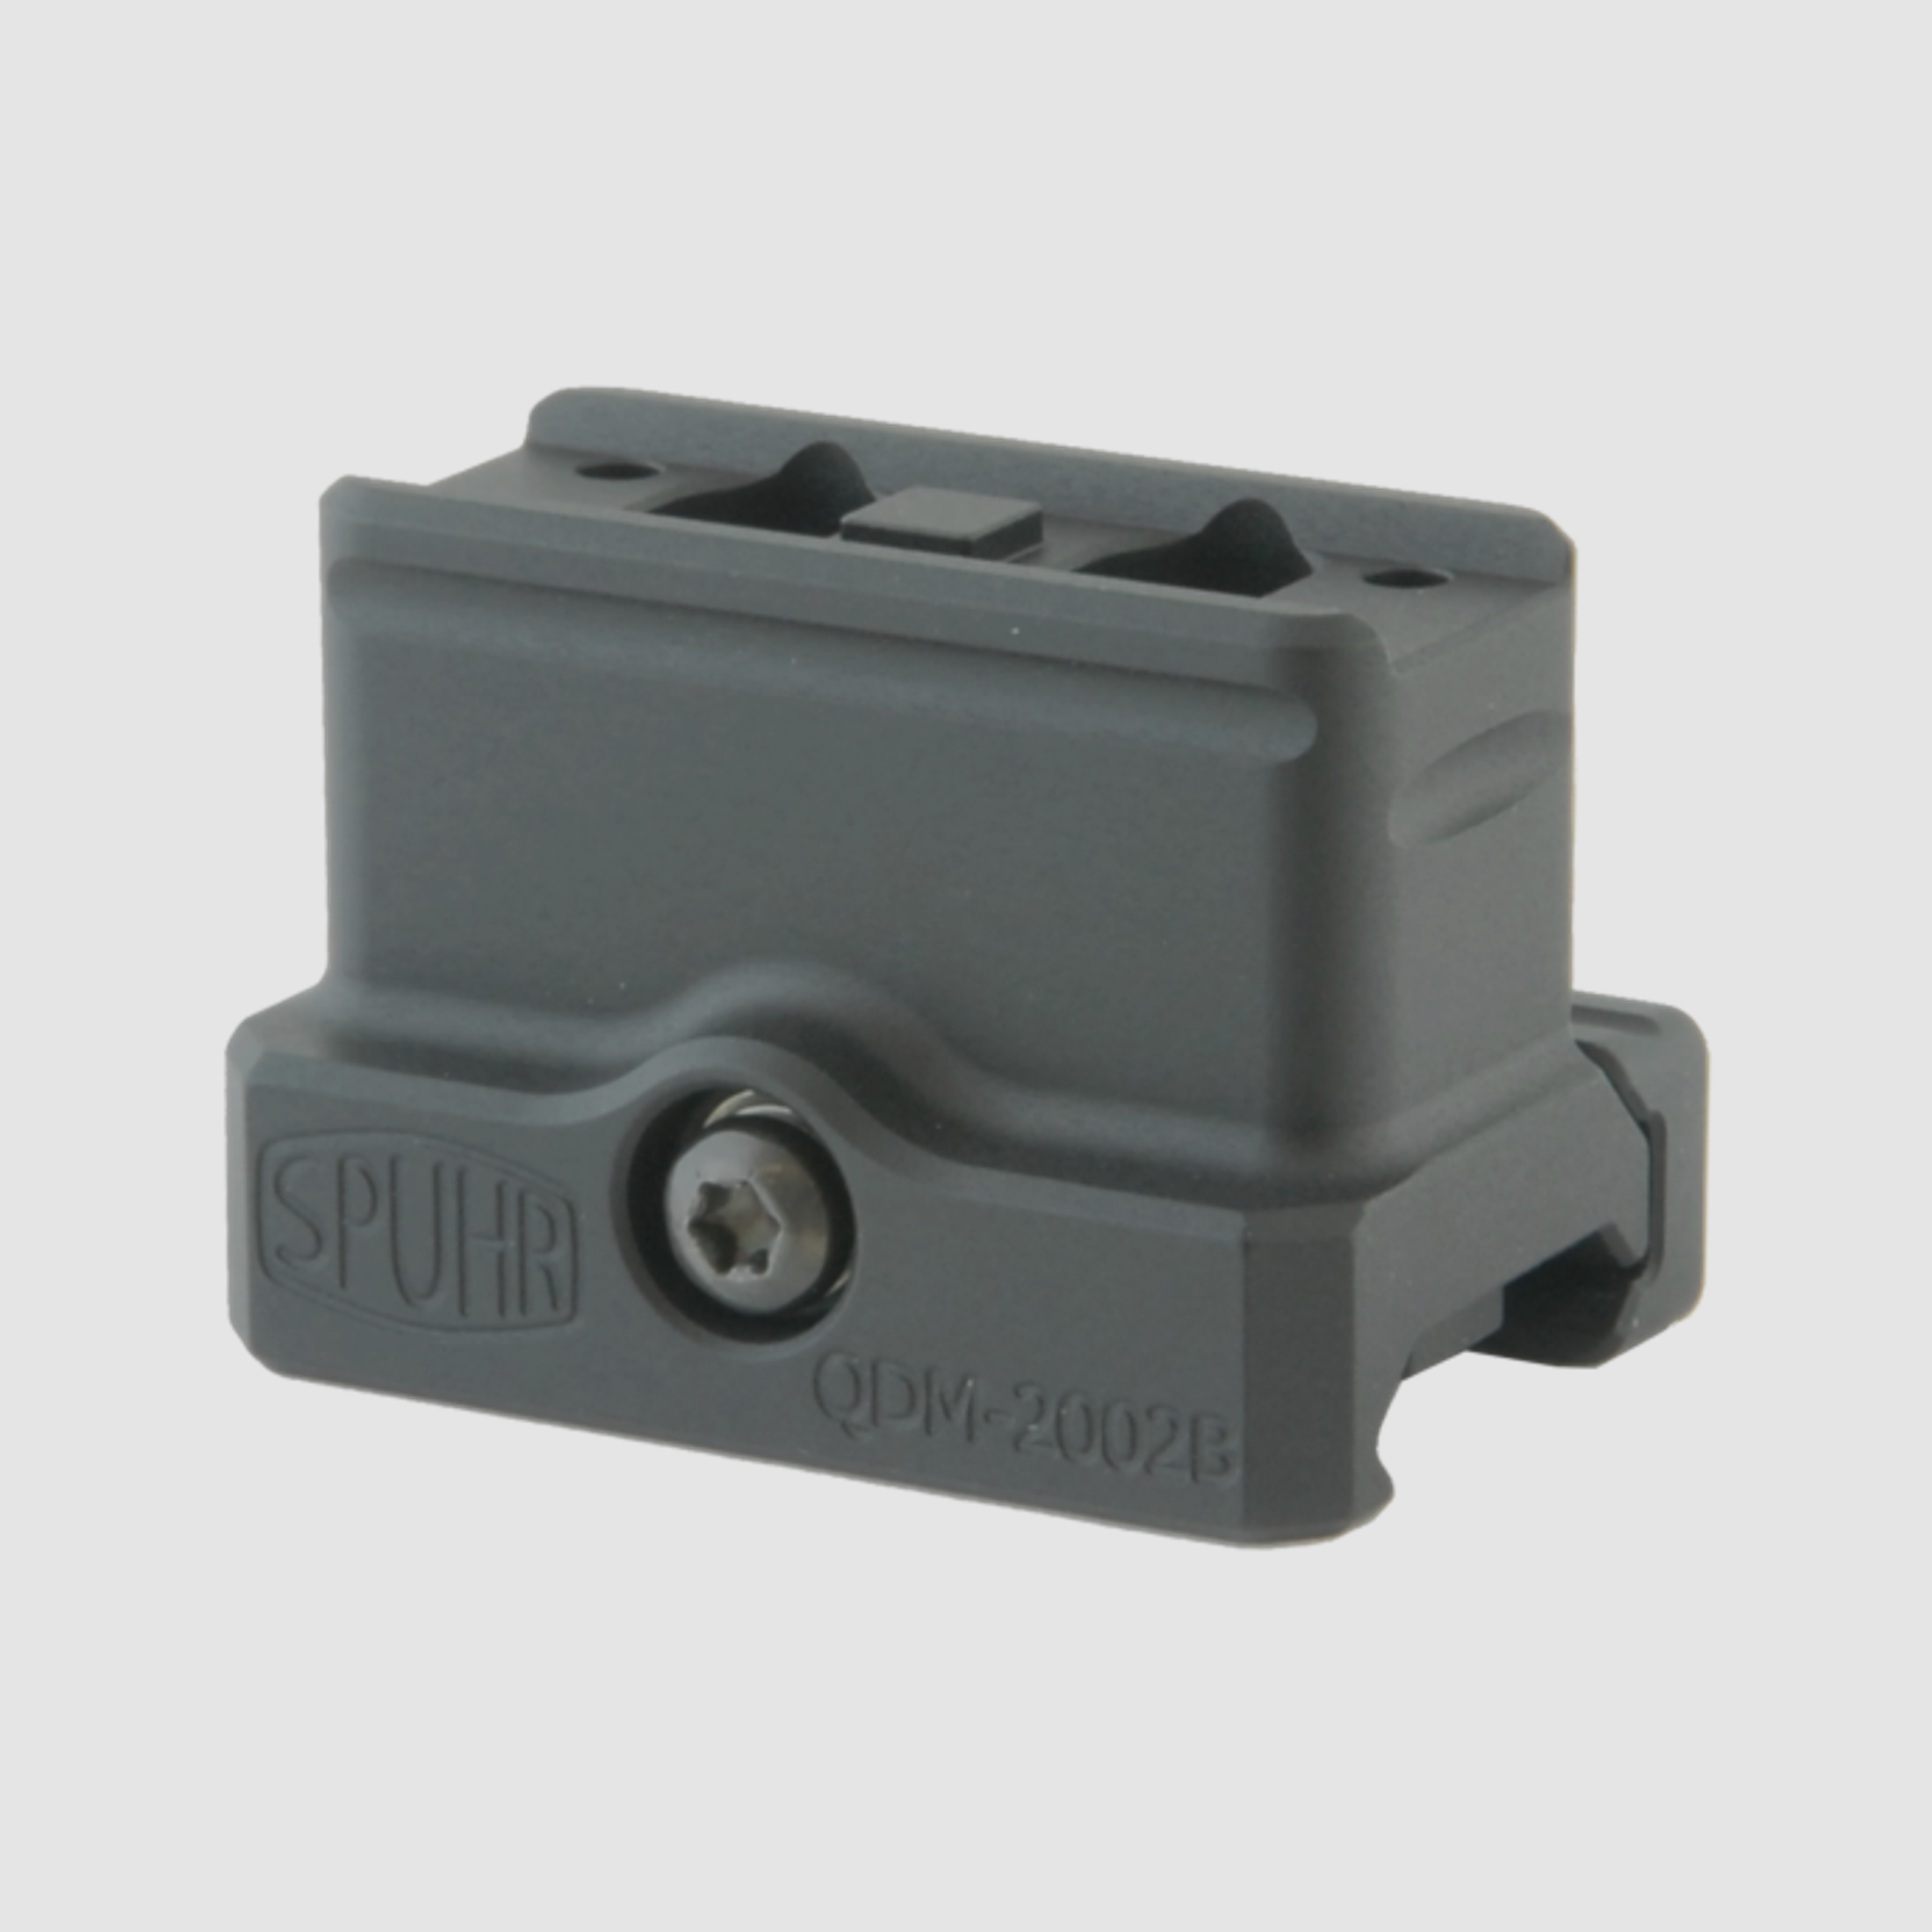 Spuhr Montage Aimpoint Micro / CompM5 H 42 / 26,26 mm